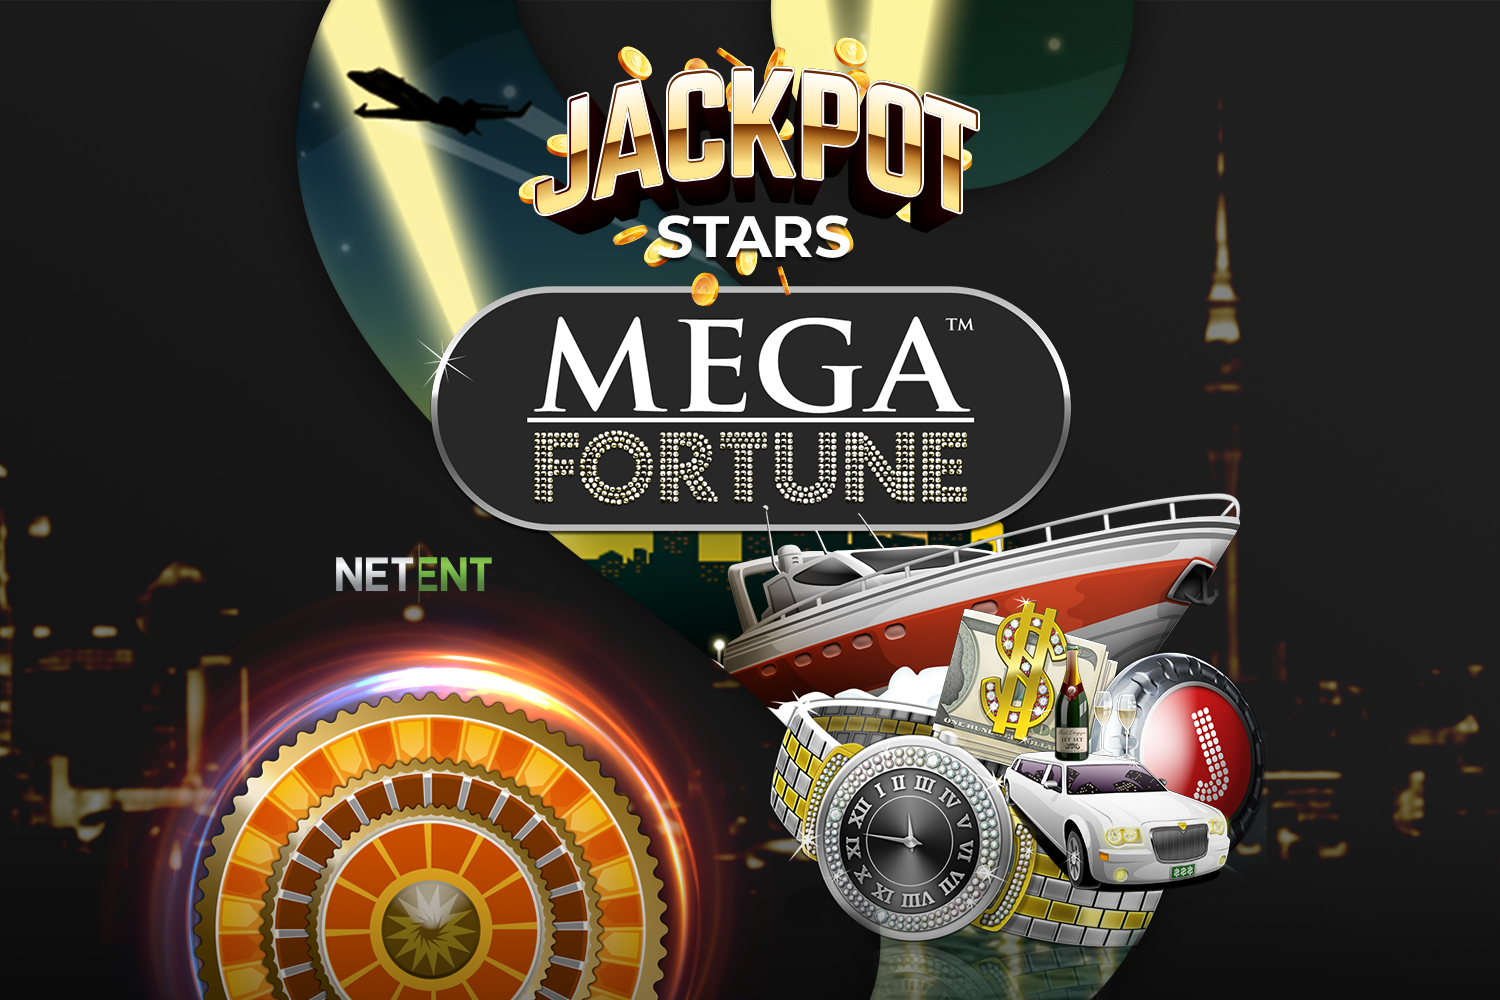 Mega Fortune - the online slot machine with the mega jackpot